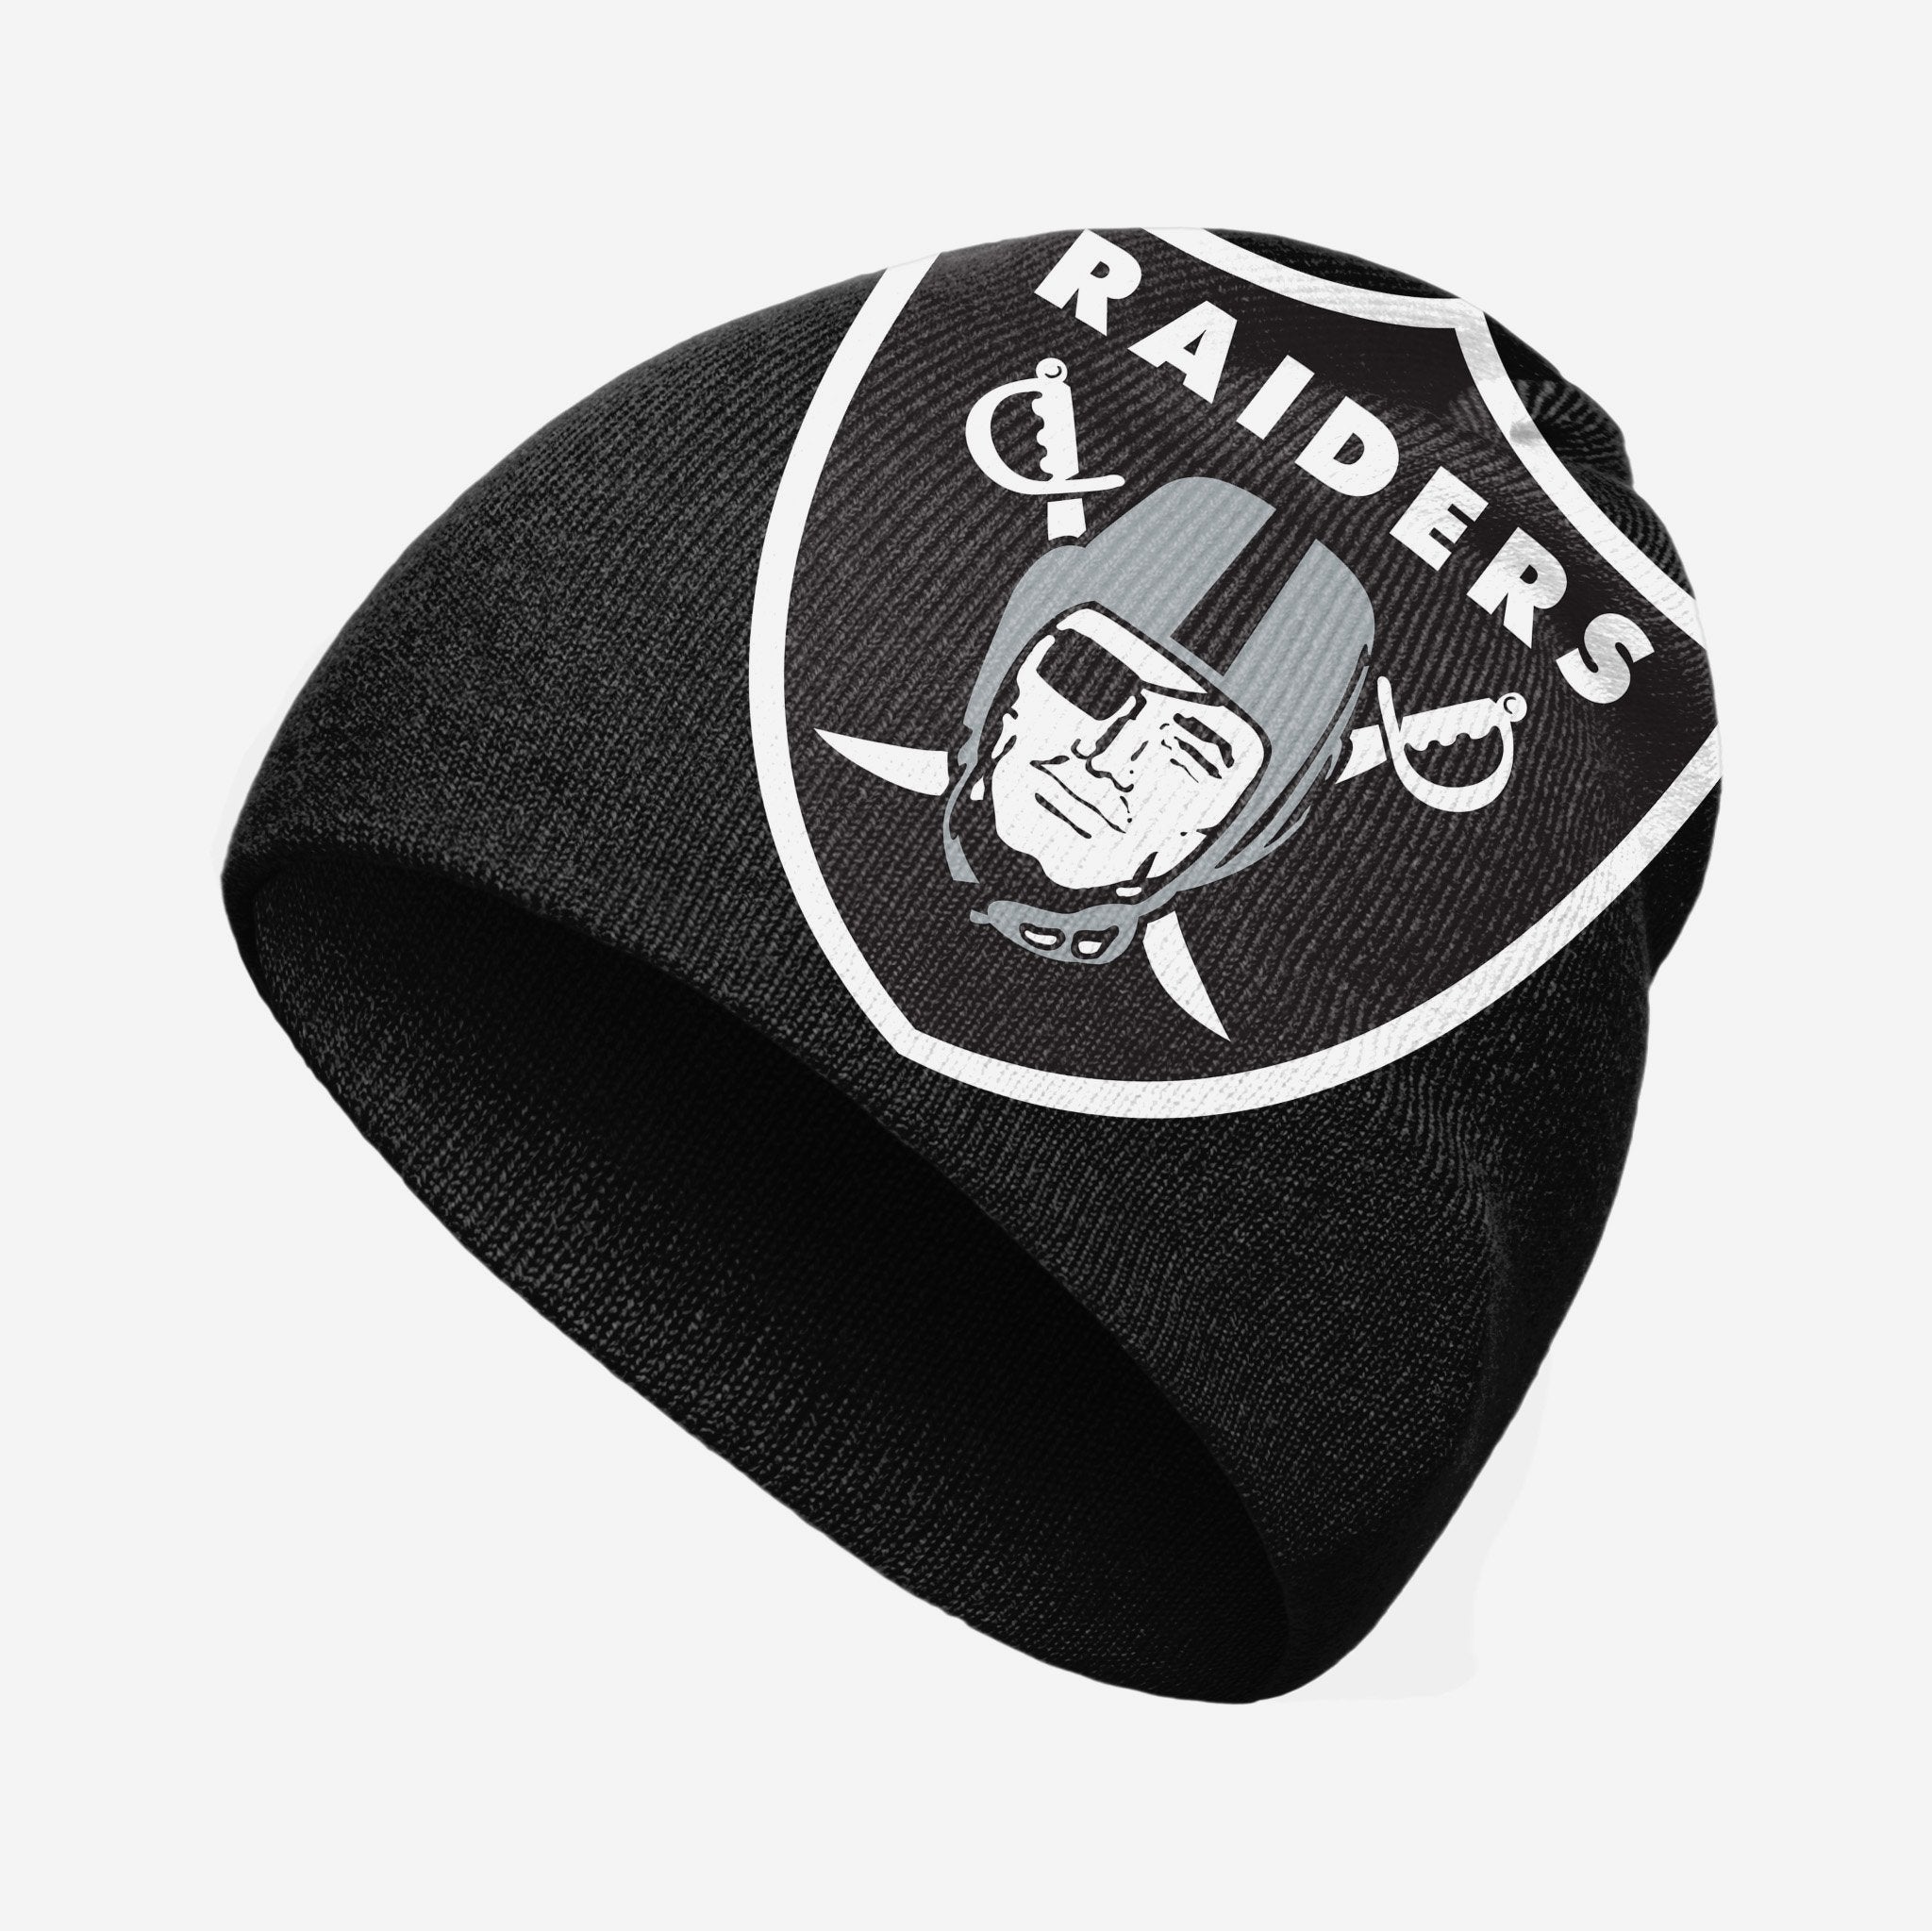 Las Vegas Raiders Winter Hat Skull Cap Beanie Fleece Warm Black Silver OSFM